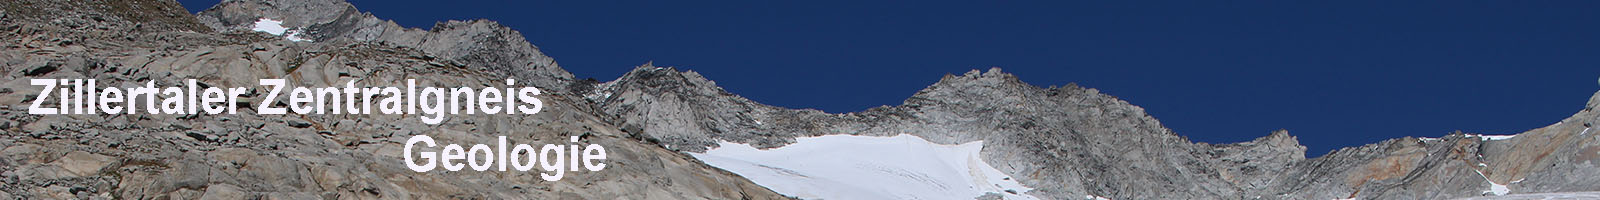 panorama image